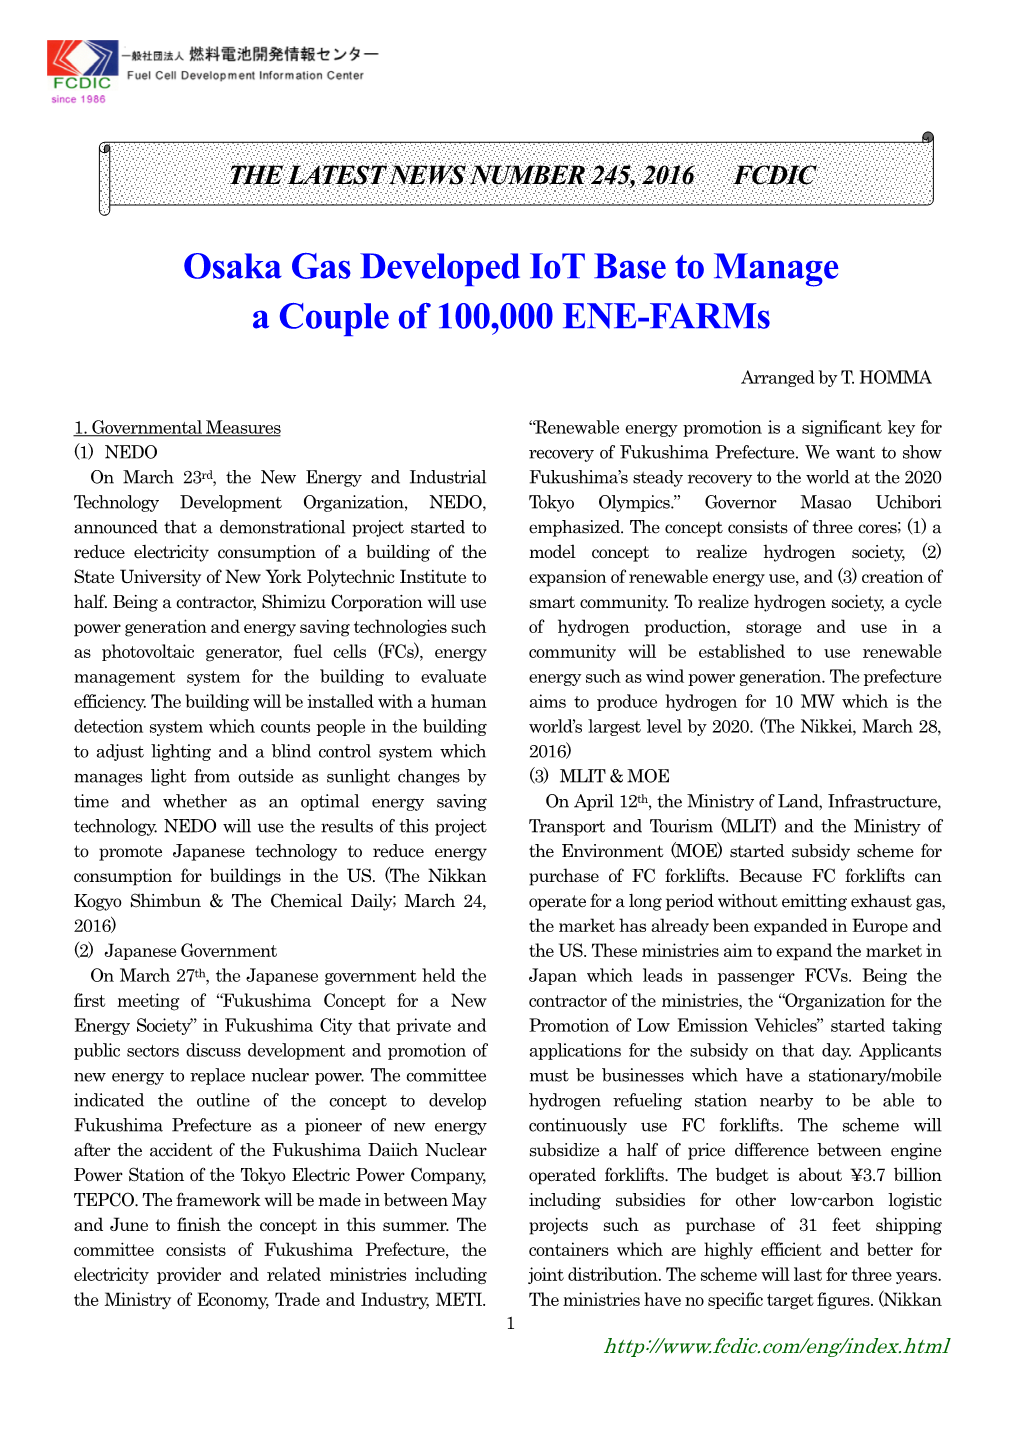 Osaka Gas Developed Iot Base to Manage a Couple of 100,000 ENE-Farms